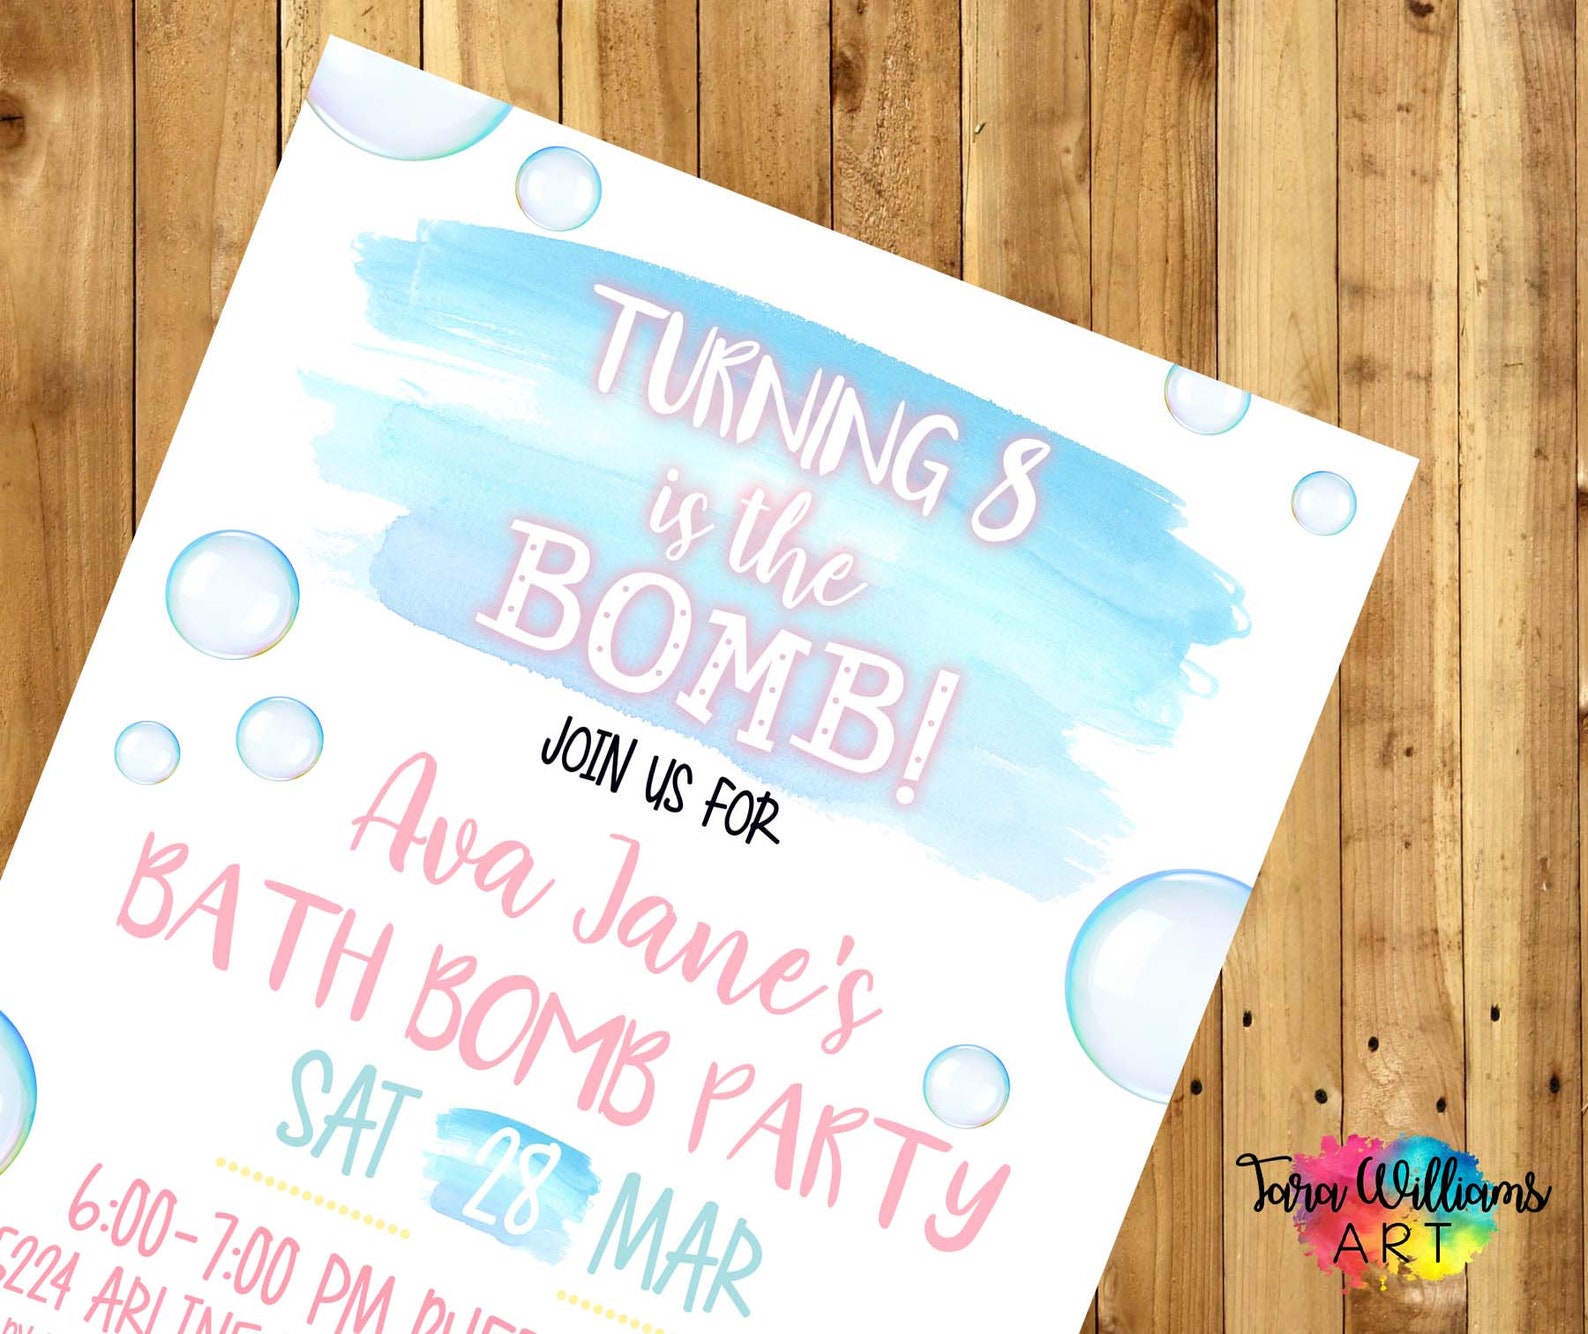 Bath Bomb Spa Party Invitation-pastel-pink-blue-yellow-soap - Etsy